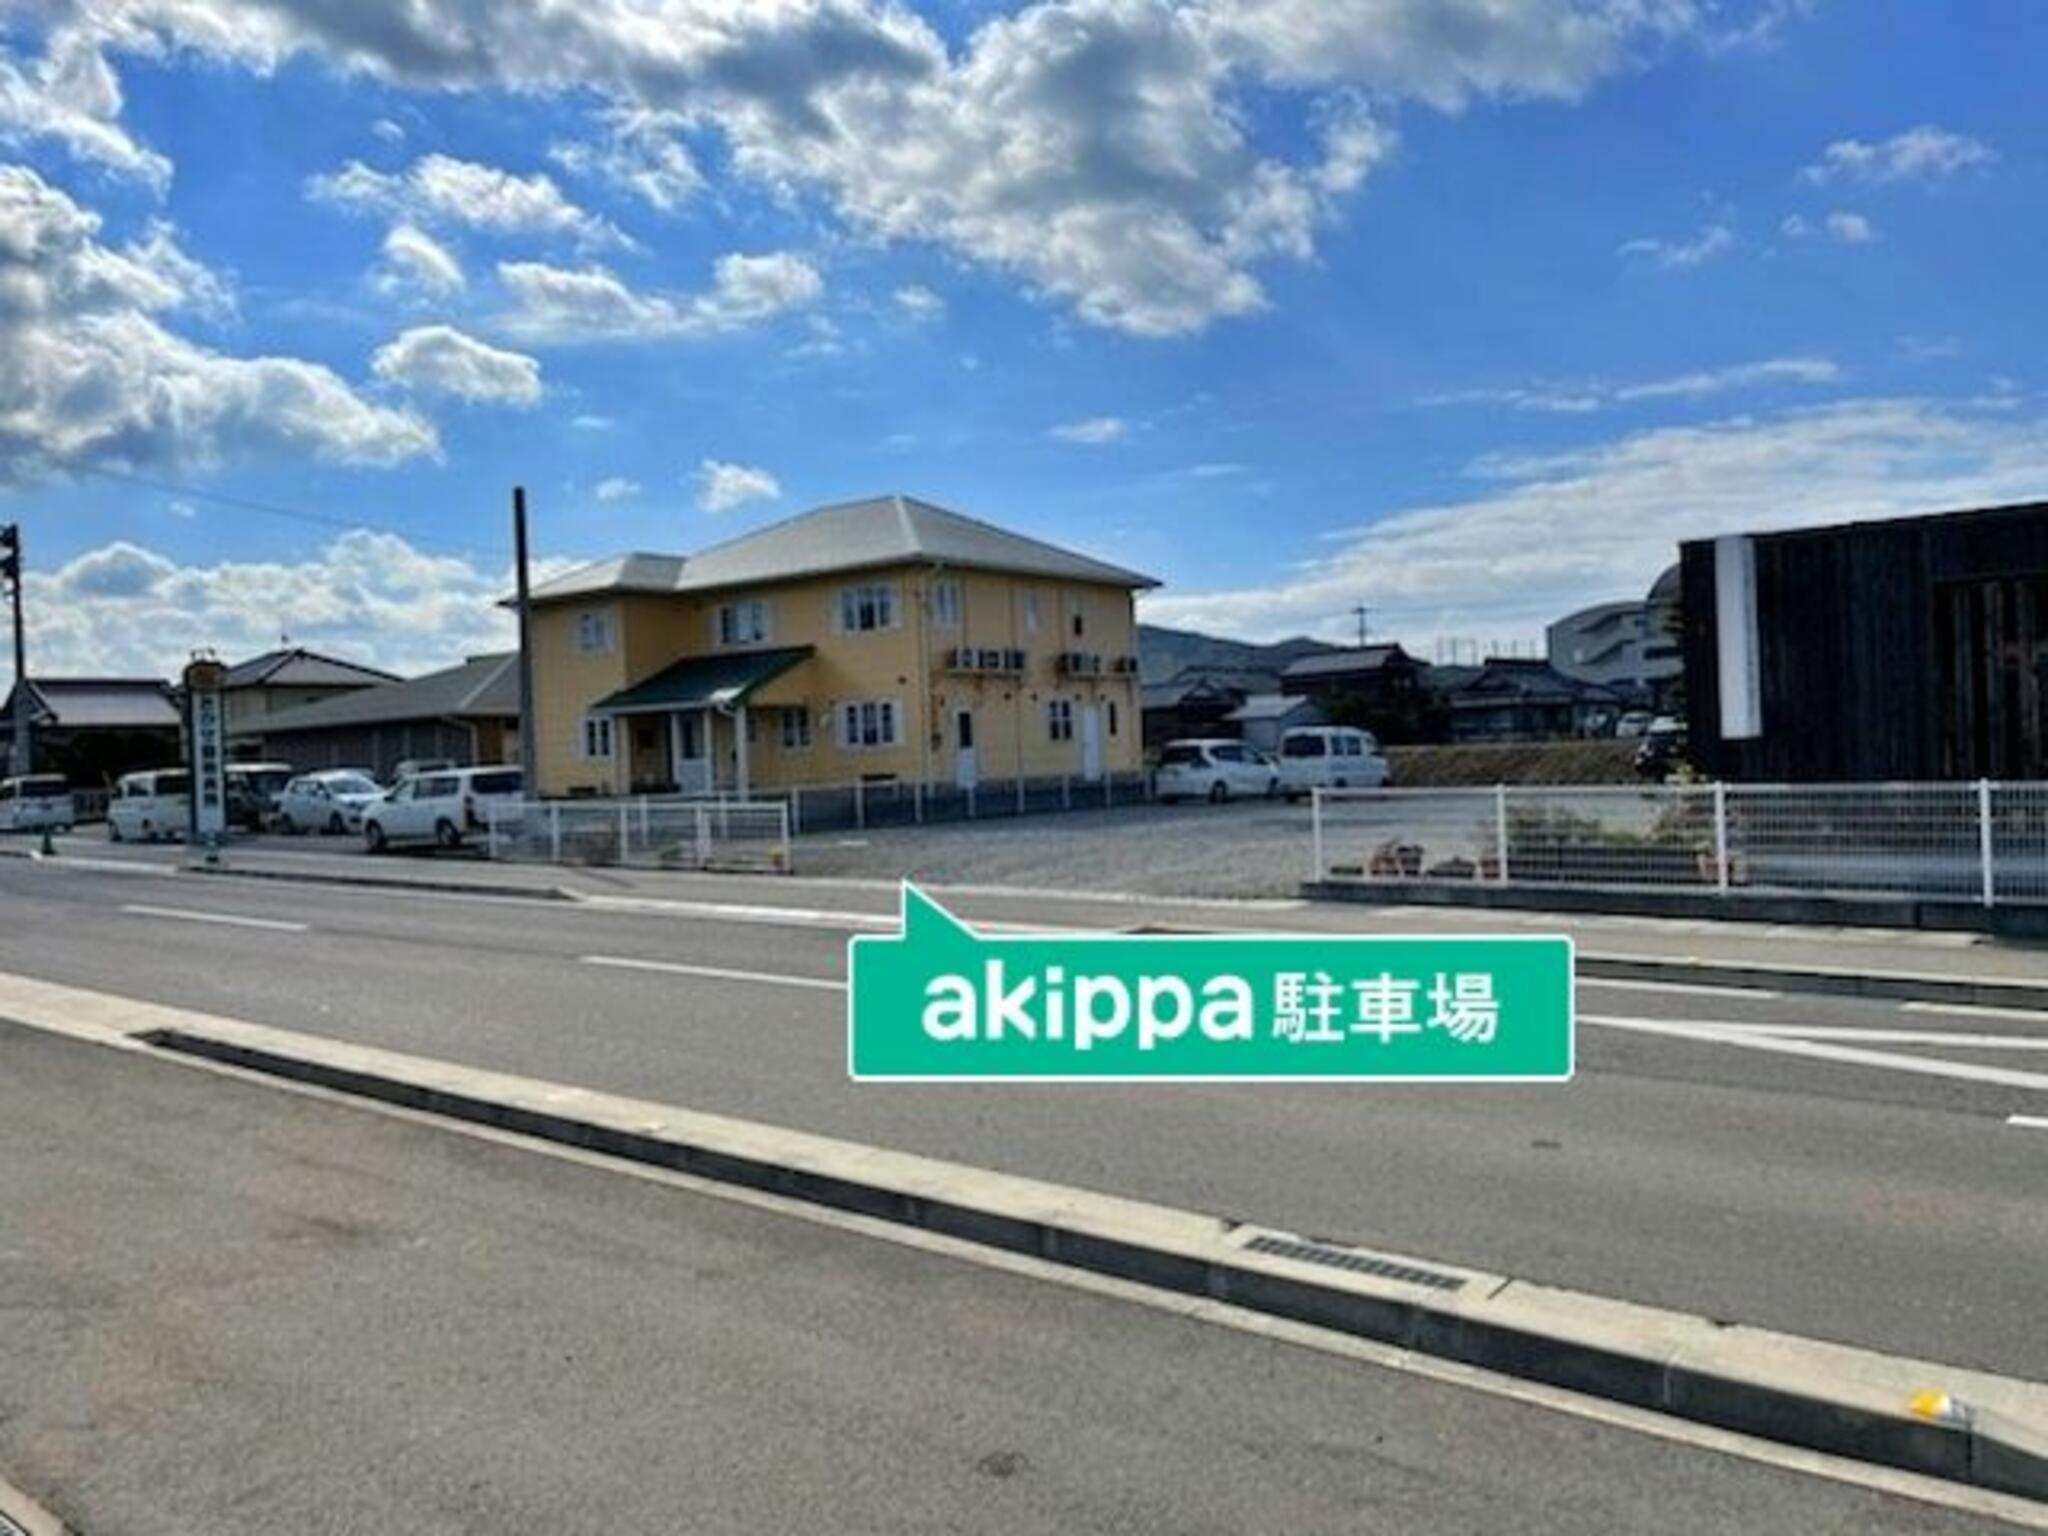 akippa駐車場:香川県三豊市高瀬町上高瀬1534の代表写真1